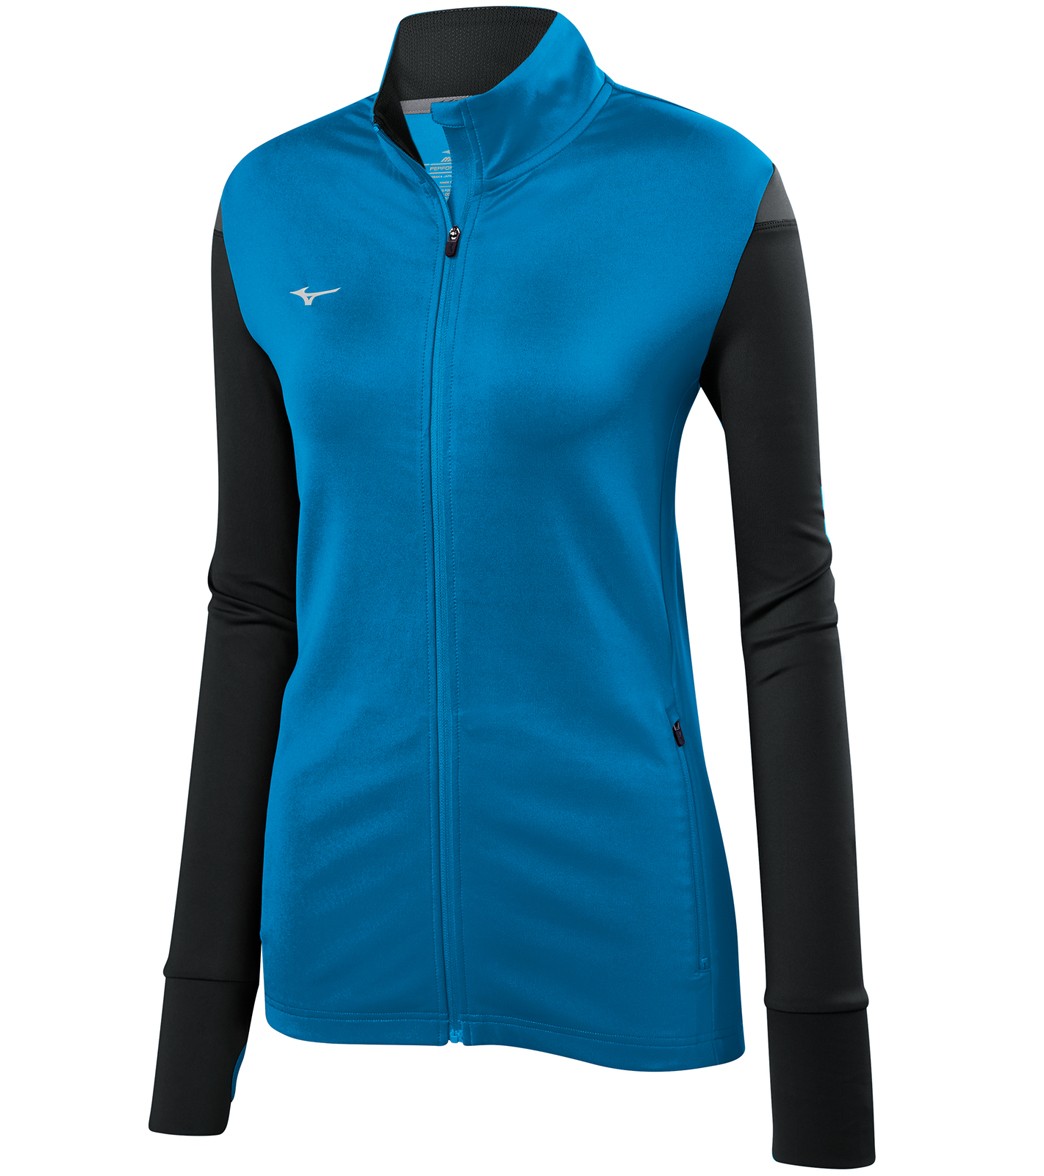 Mizuno Women's Horizon Full Zip Volleyball Jacket - Diva Blue/Black/Charcoal Medium - Swimoutlet.com